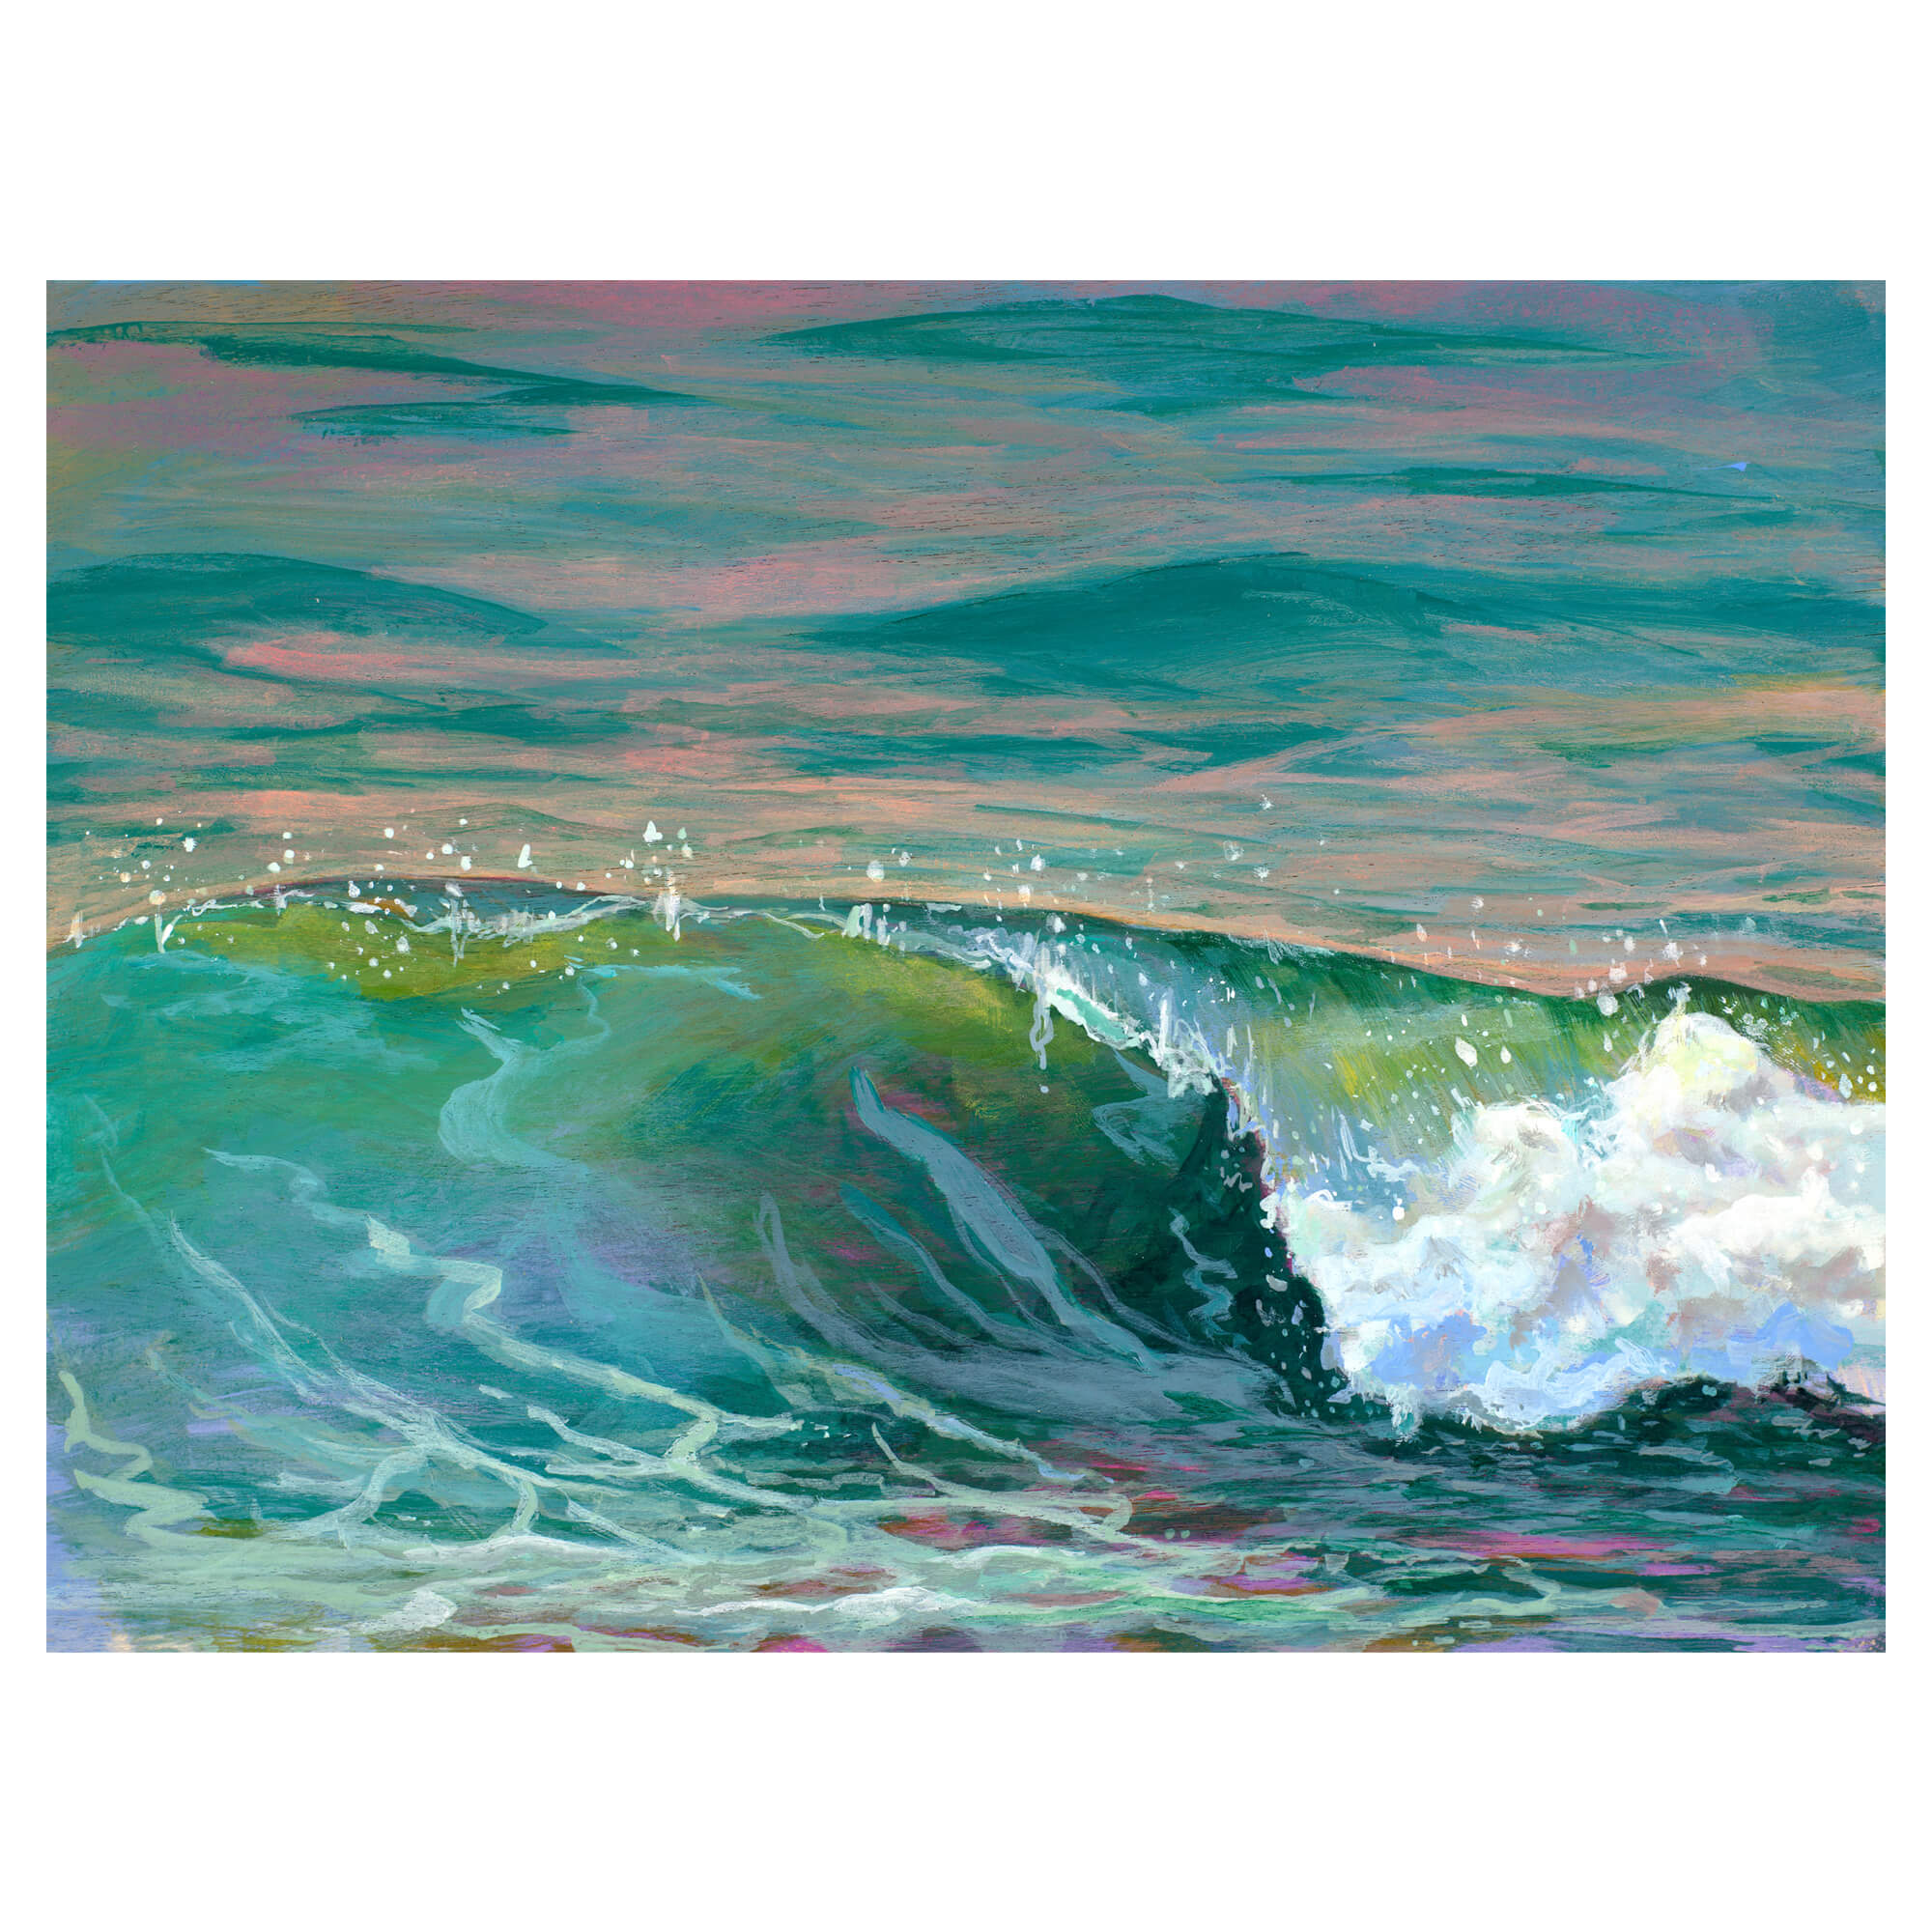 Crashing waves with emerald-like color by Hawaii artist Lindsay Wilkins